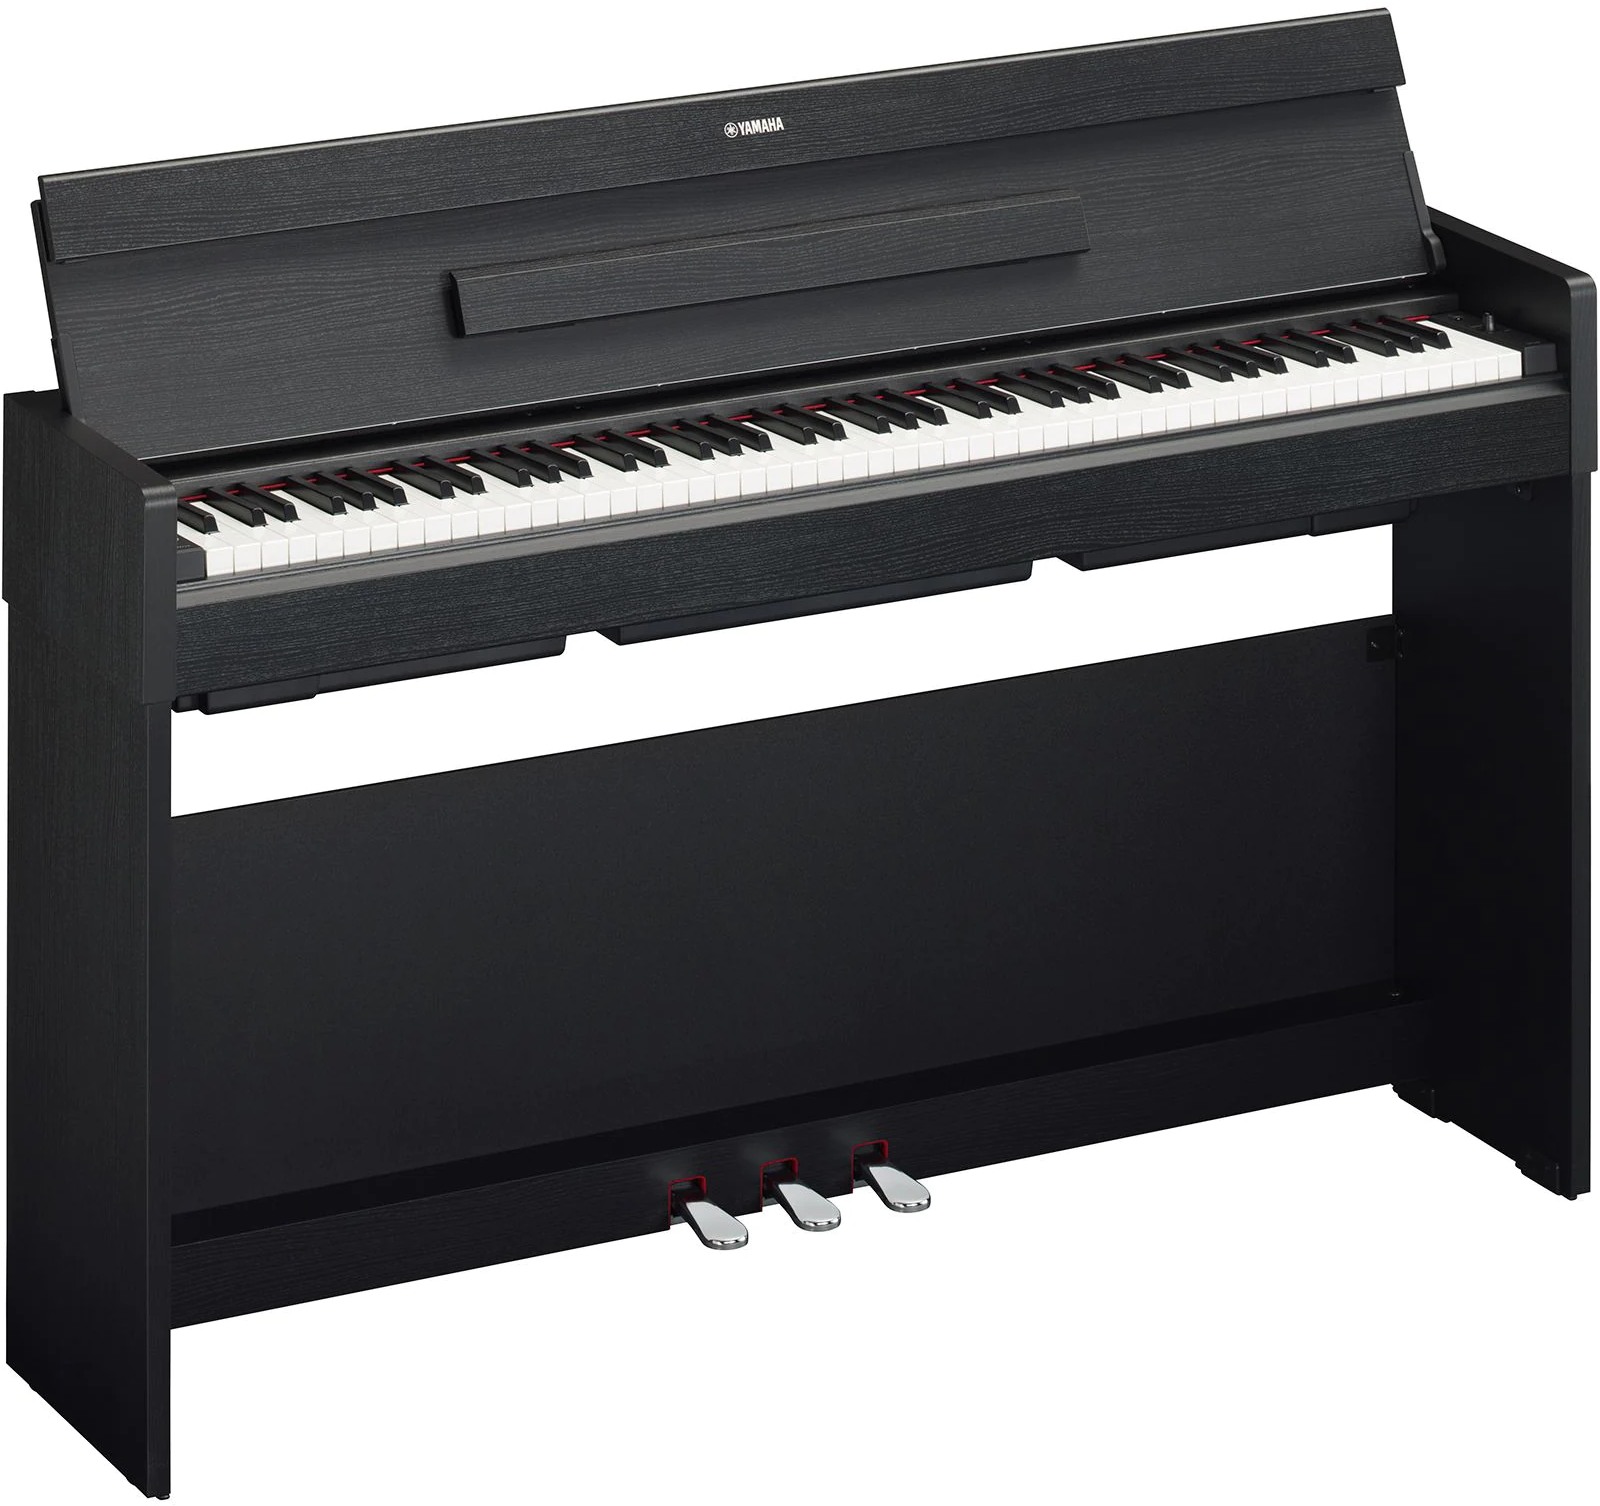 Yamaha Ydp-s35 B - Digital piano with stand - Variation 1